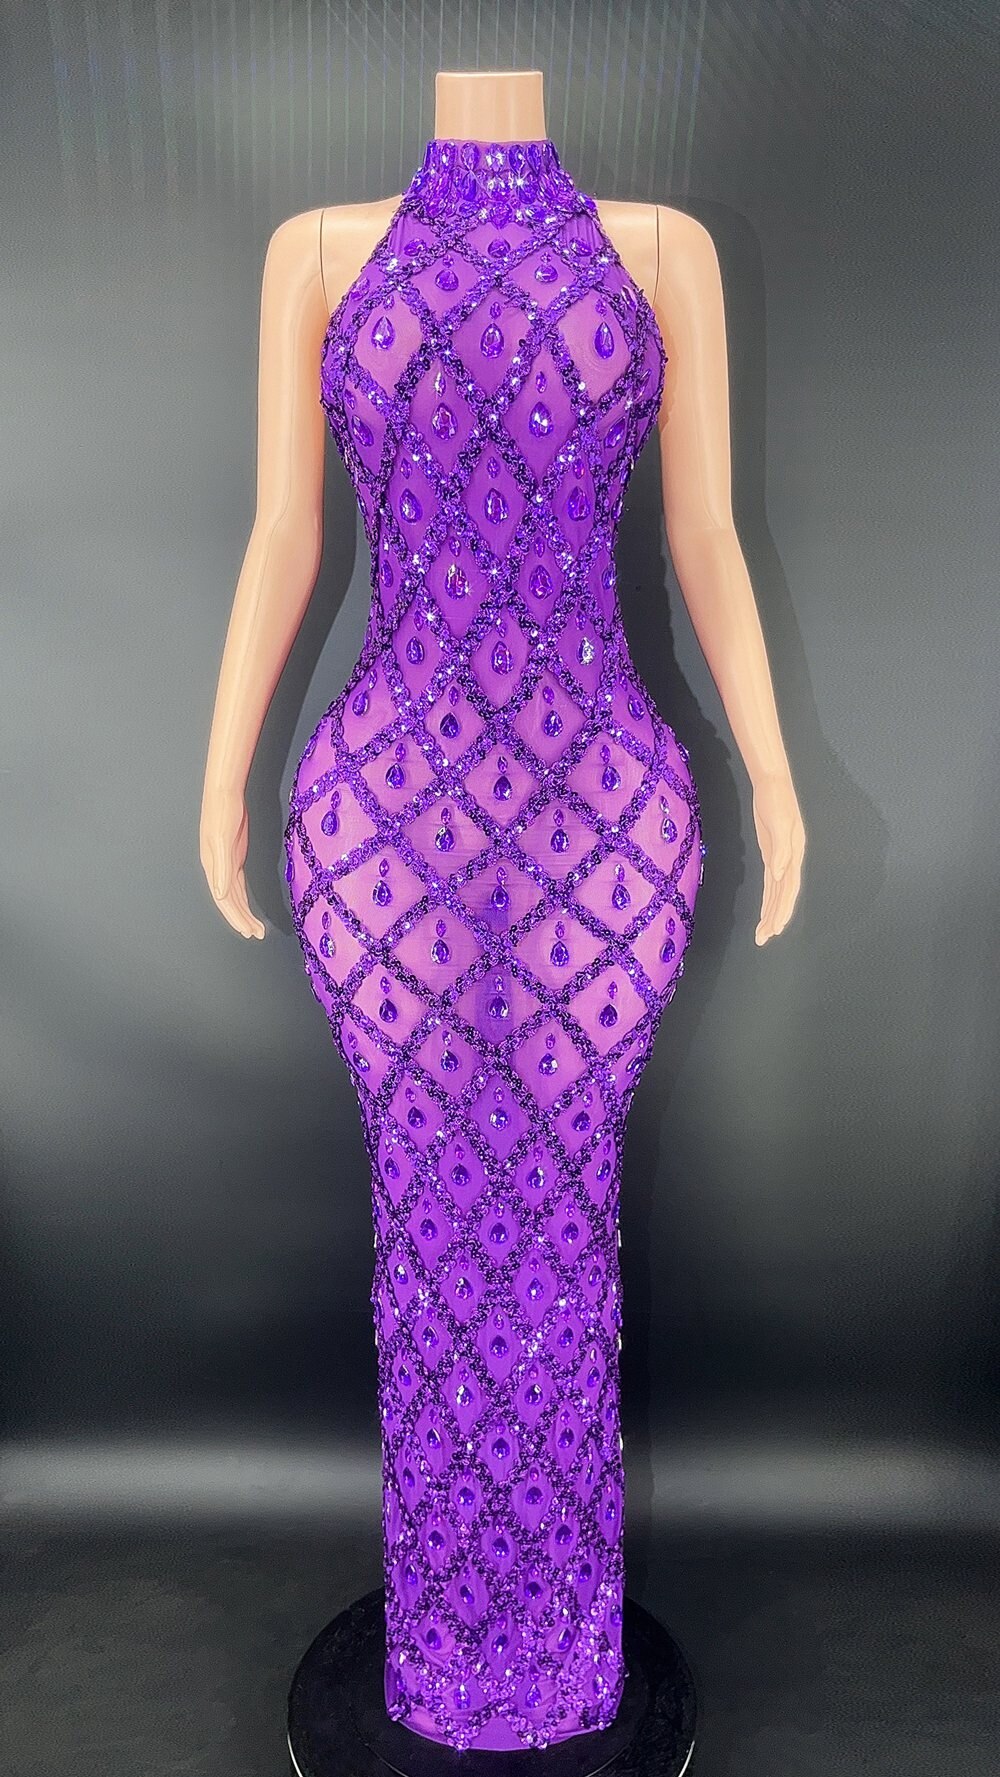 Sparkly Sequins Rhinestones Sleeveless Dress Sexy Mesh Transparent